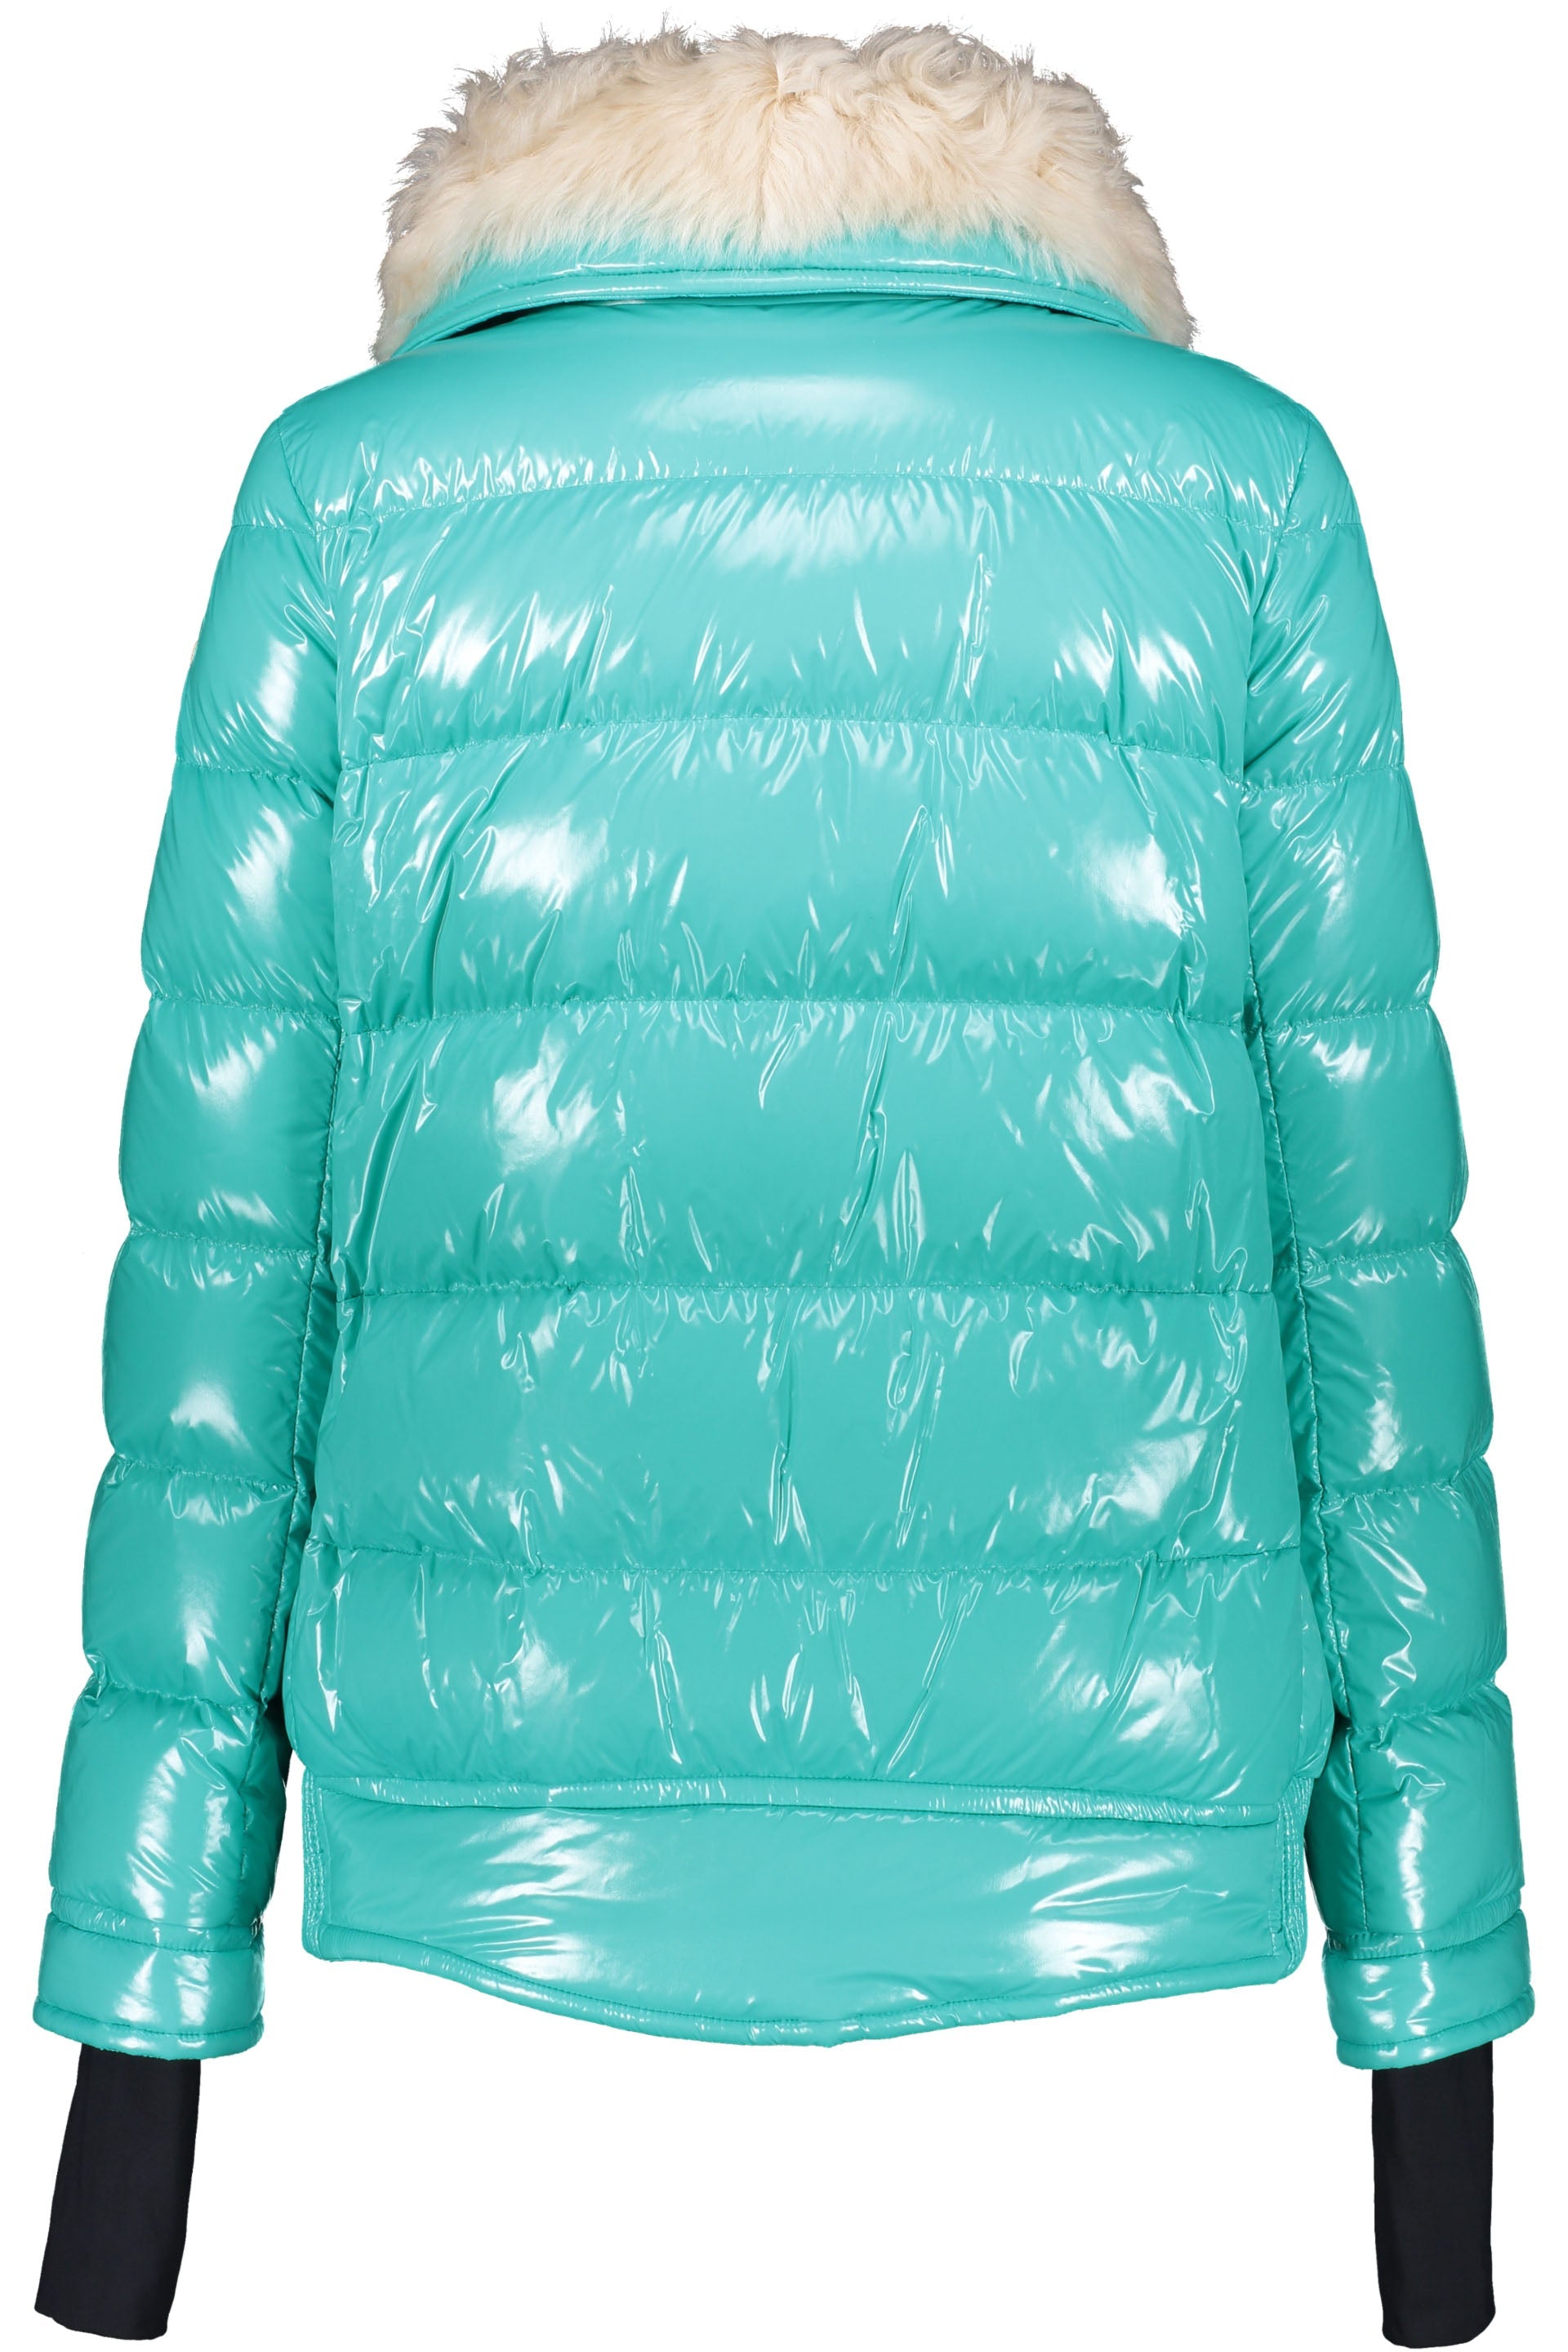 Arabba padded jacket-Moncler Grenoble-OUTLET-SALE-ARCHIVIST